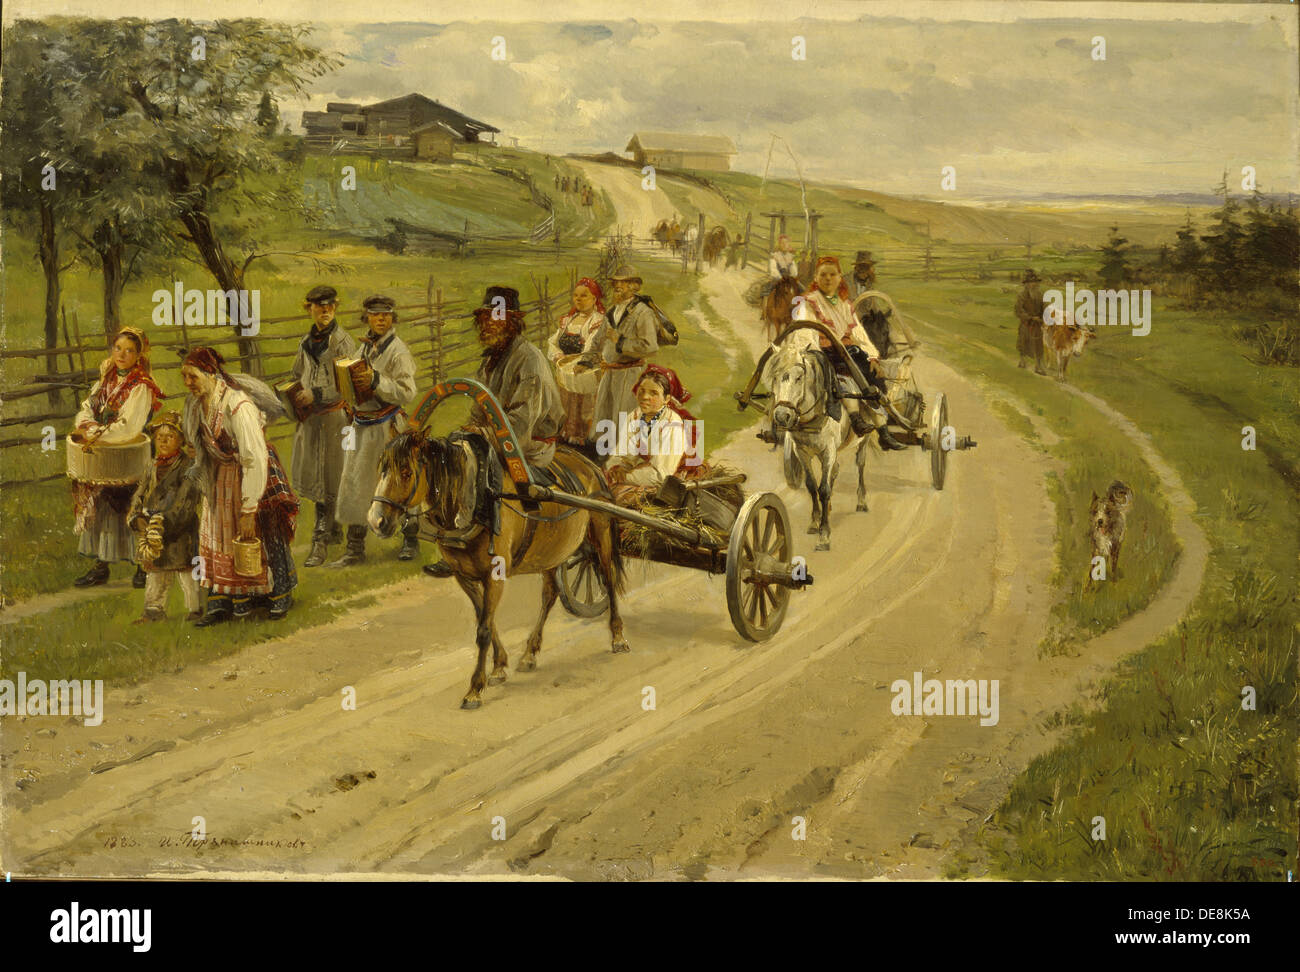 The Return journey from the market, 1883. Artist: Pryanishnikov, Illarion Mikhailovich (1840-1894) Stock Photo